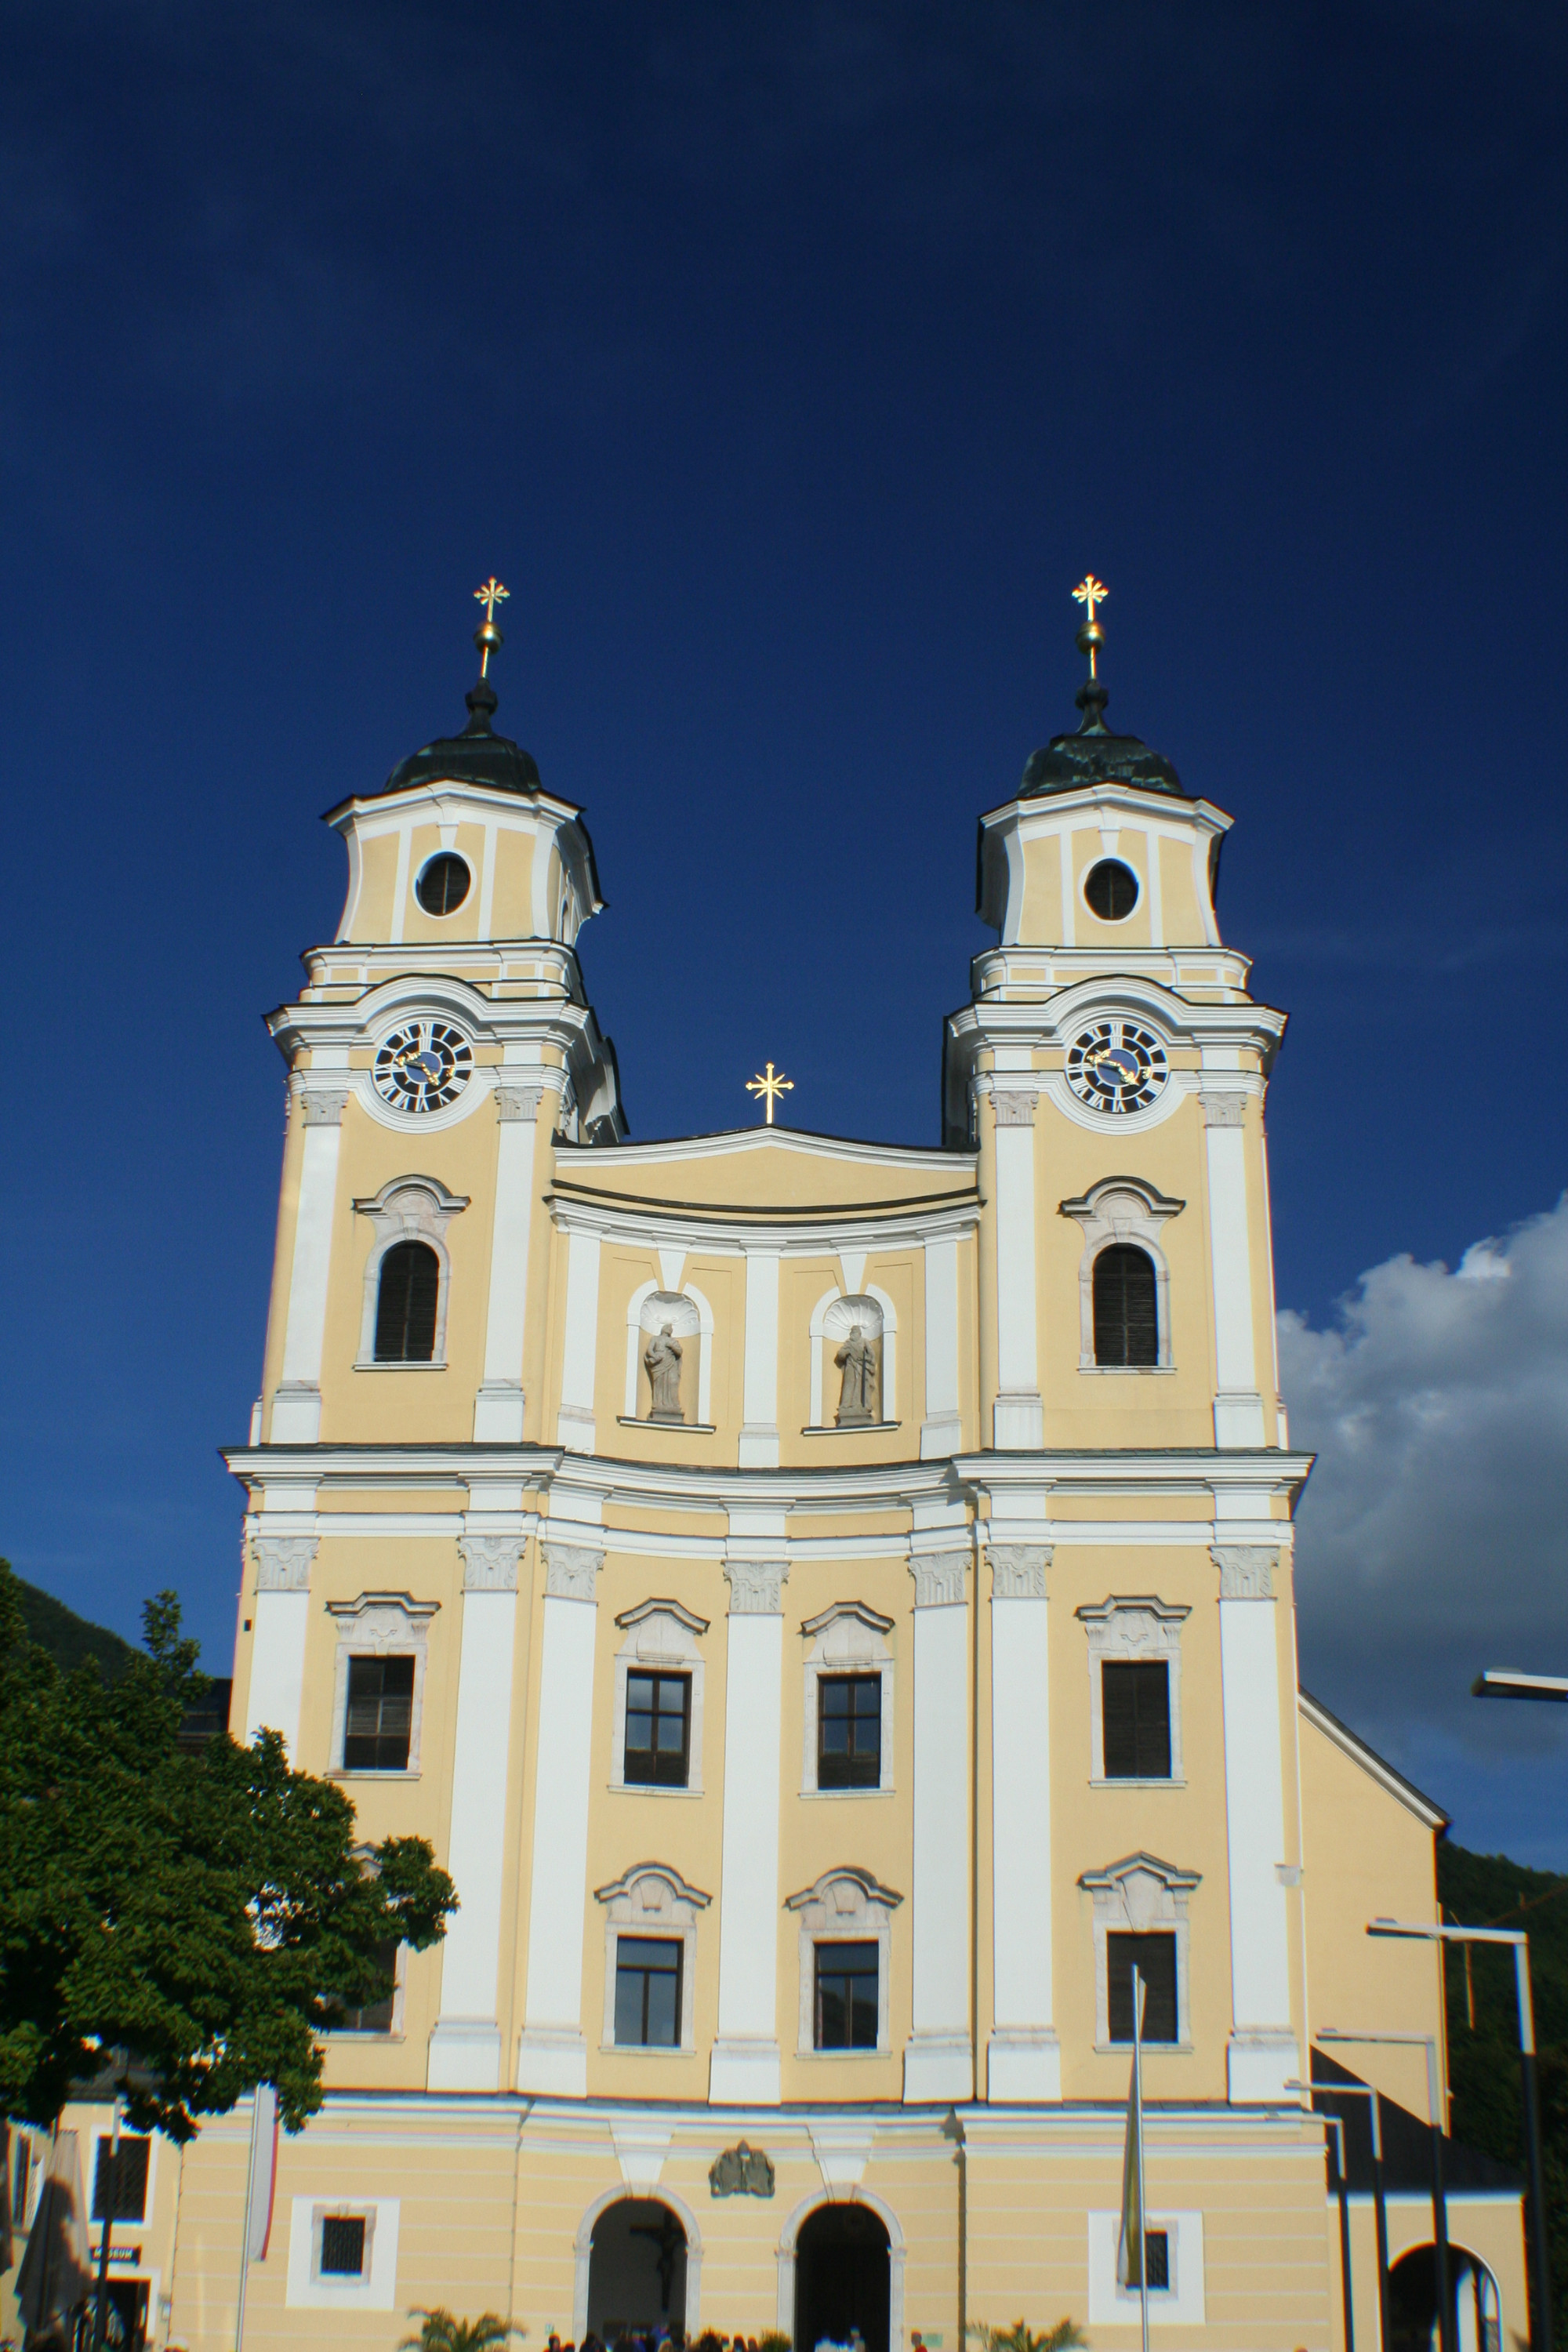 Mondsee Abbey<br/>
Monastery Wedding church in Sound of Music